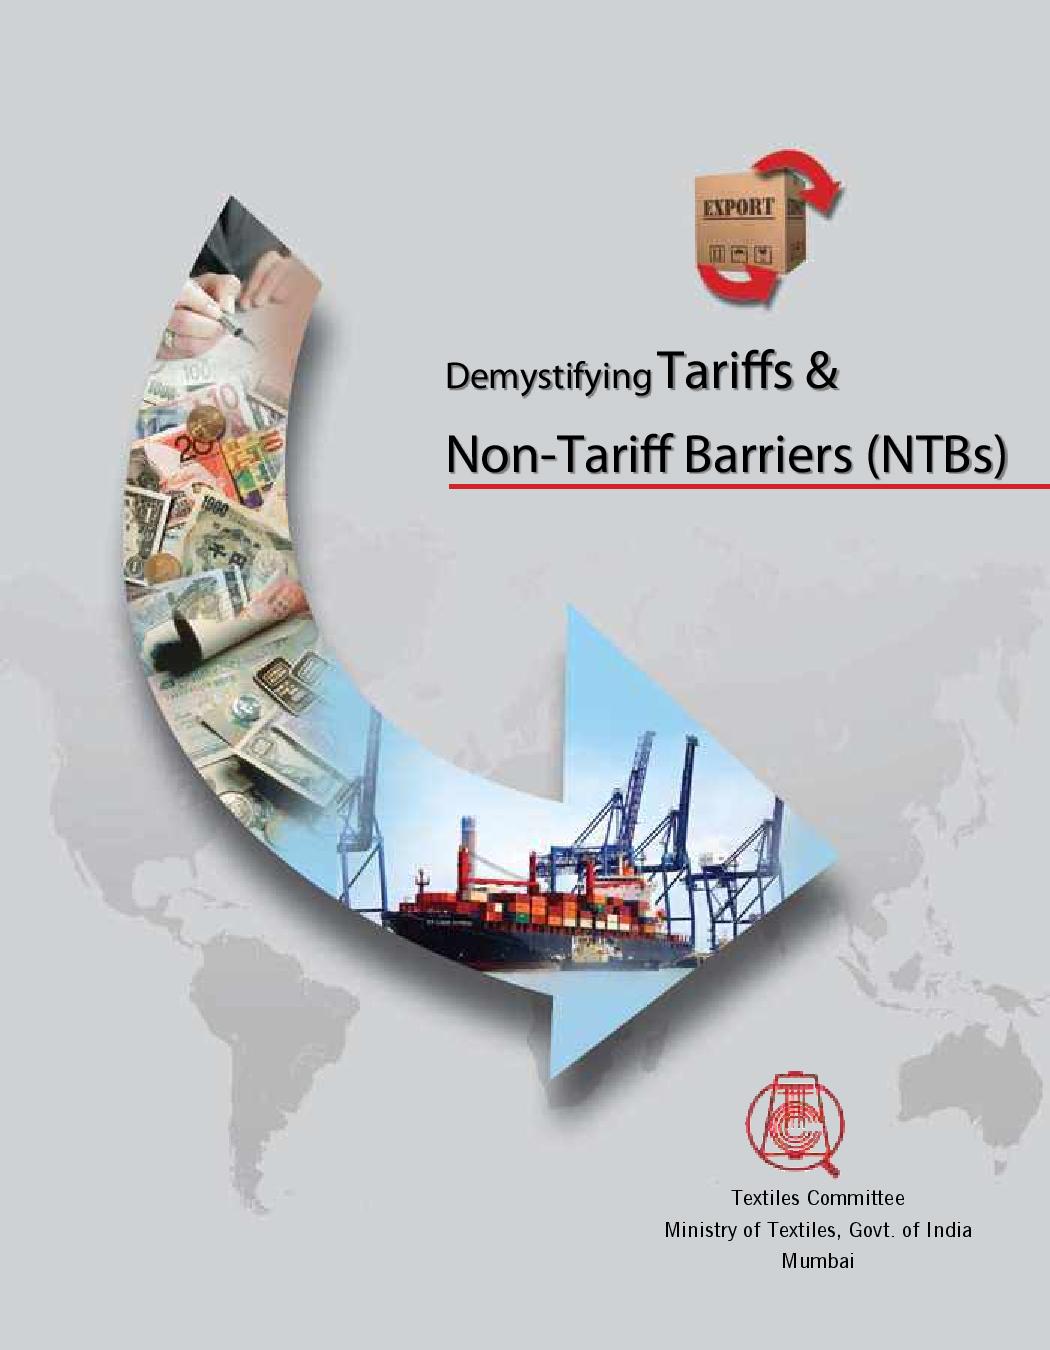  Demystifying Tariffs & Non-Tariff Barriers (NTBs)